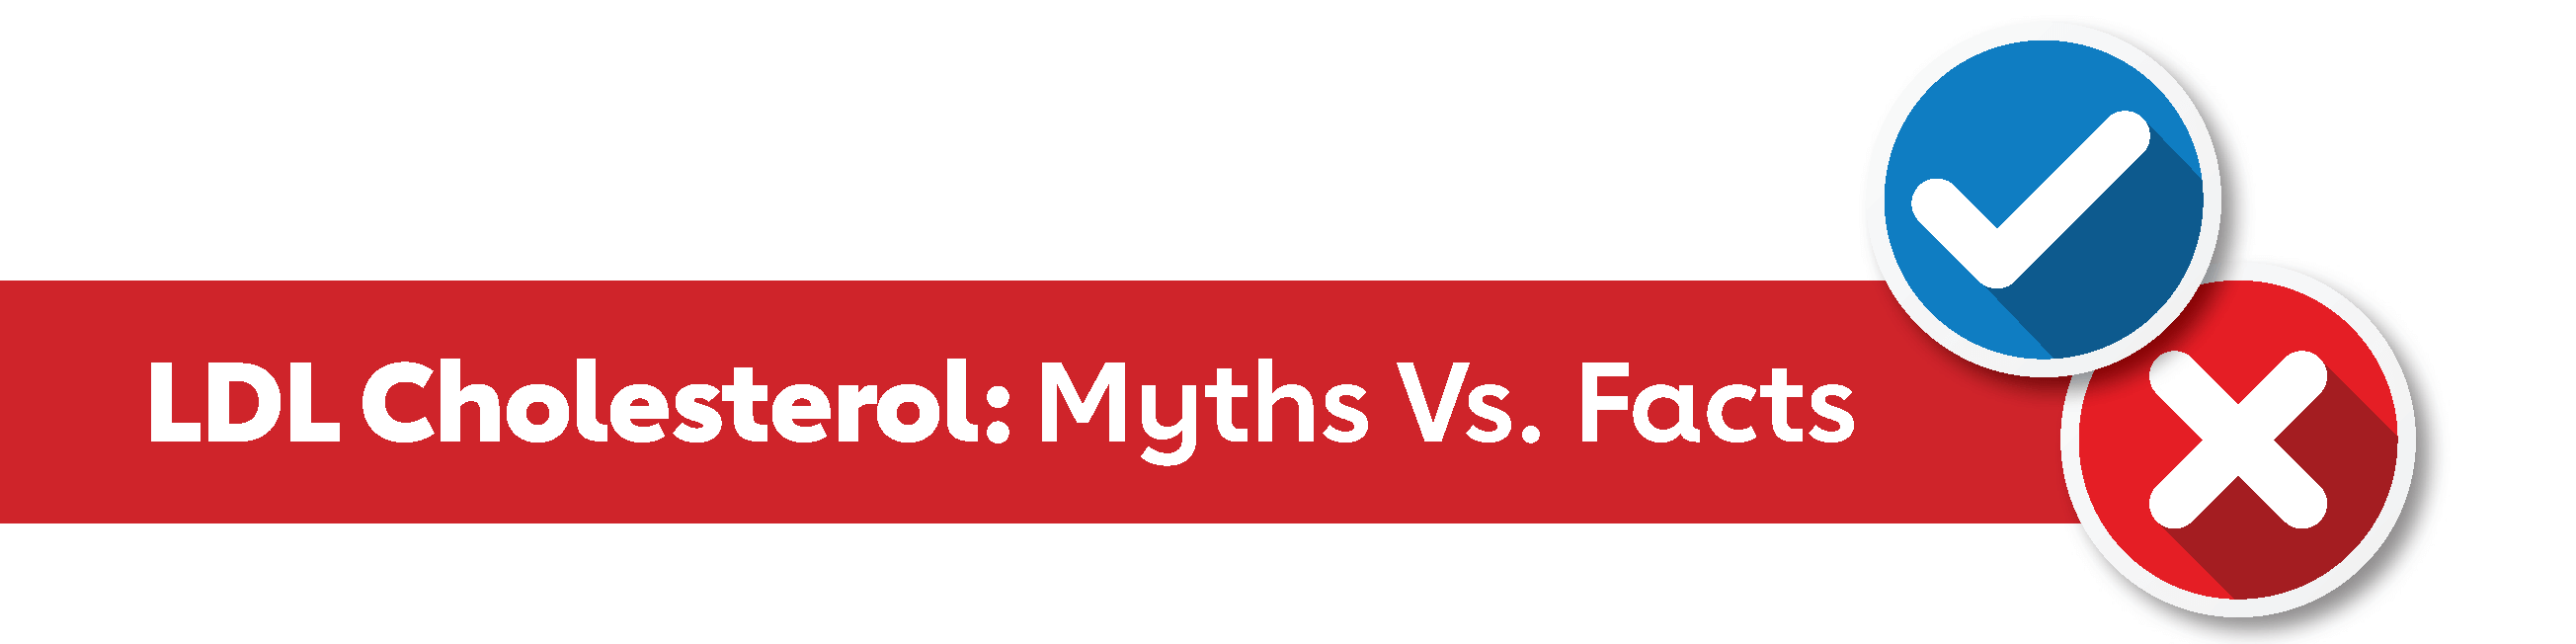 LDL Cholesterol Myths Vs Facts banner